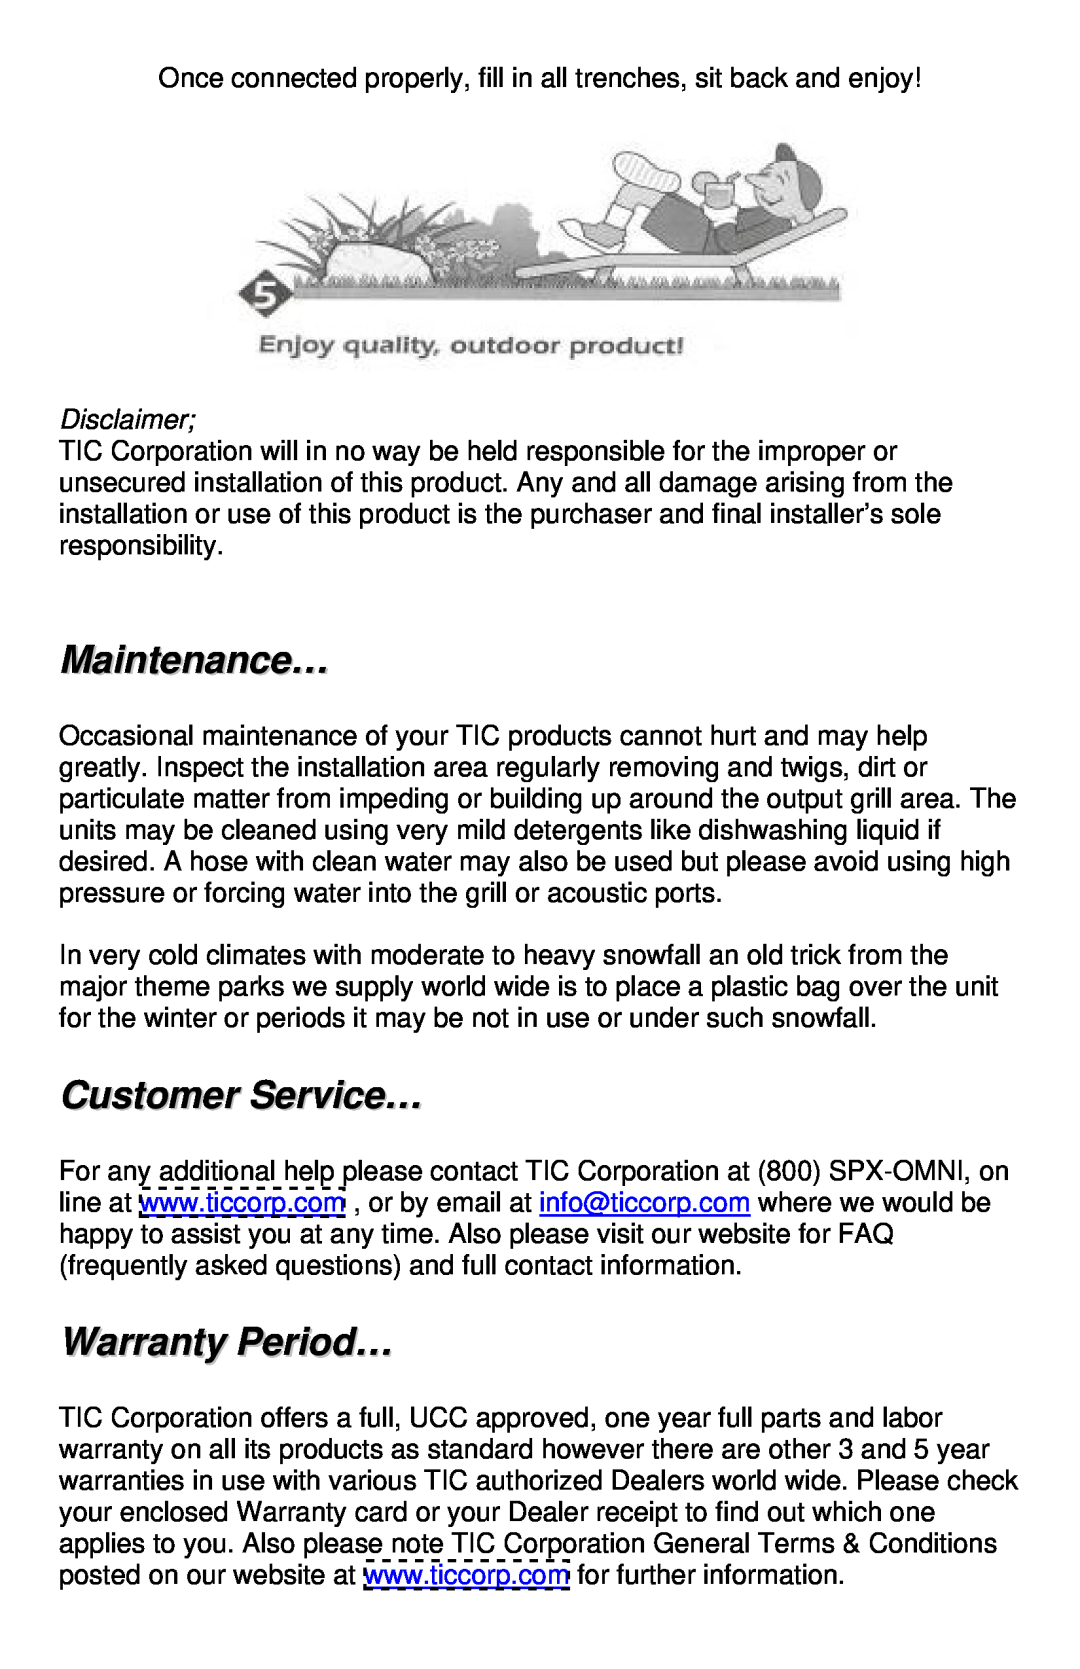 TIC TFS15, TFS14 manual Maintenance…, Customer Service…, Warranty Period…, Disclaimer 